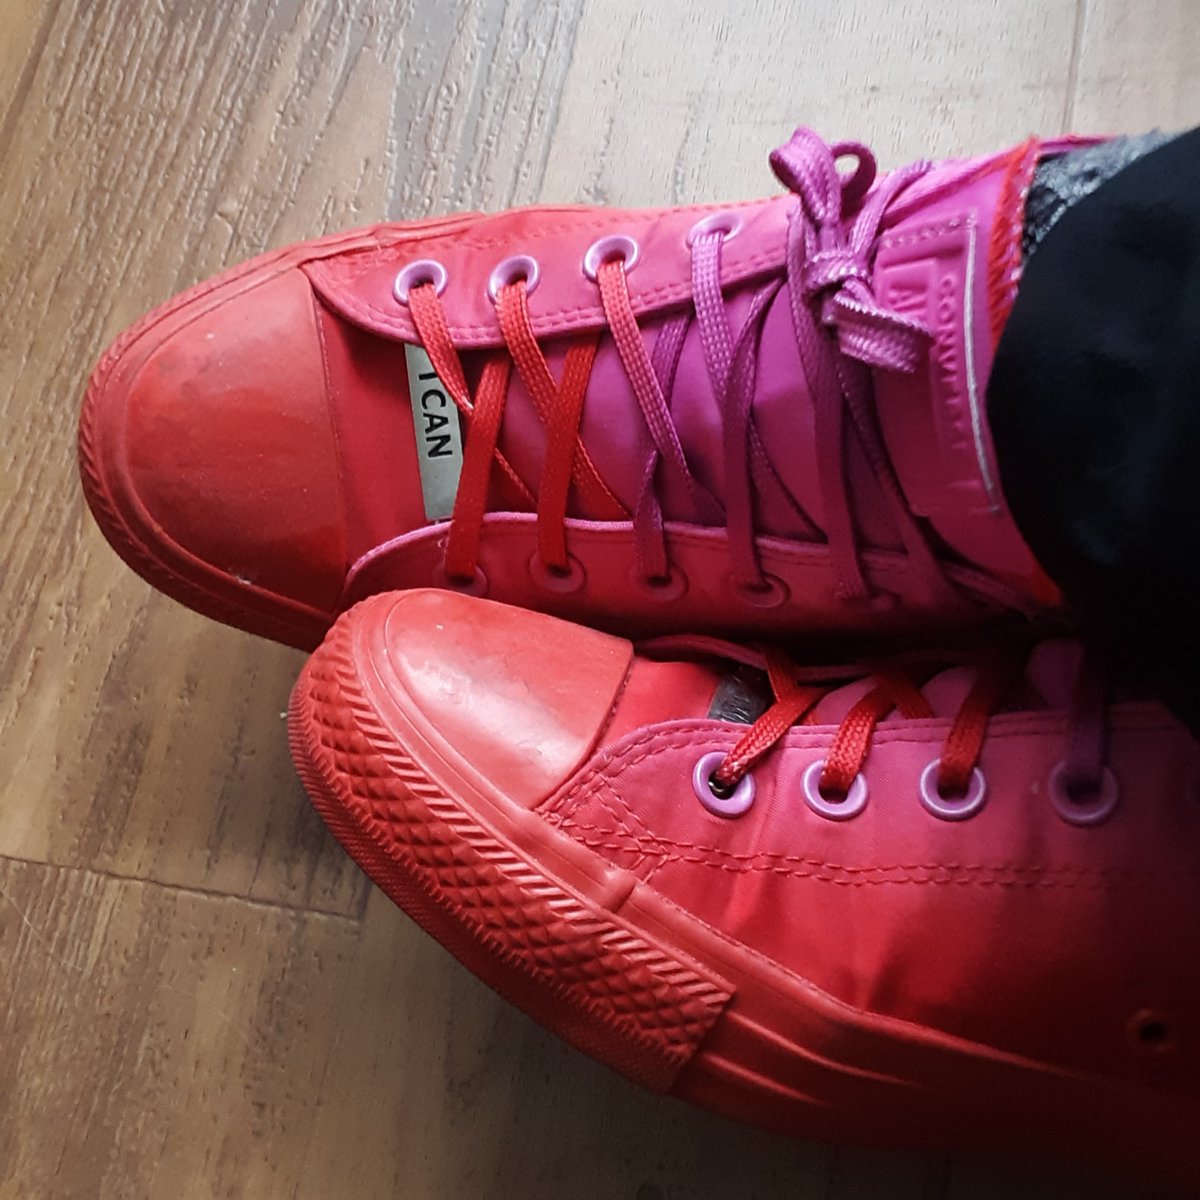 My red sneakers @oakley_red for #redsneakers #redsneakersforoakley #foodallergyawareness  #Awareness #nationalredsneakerday